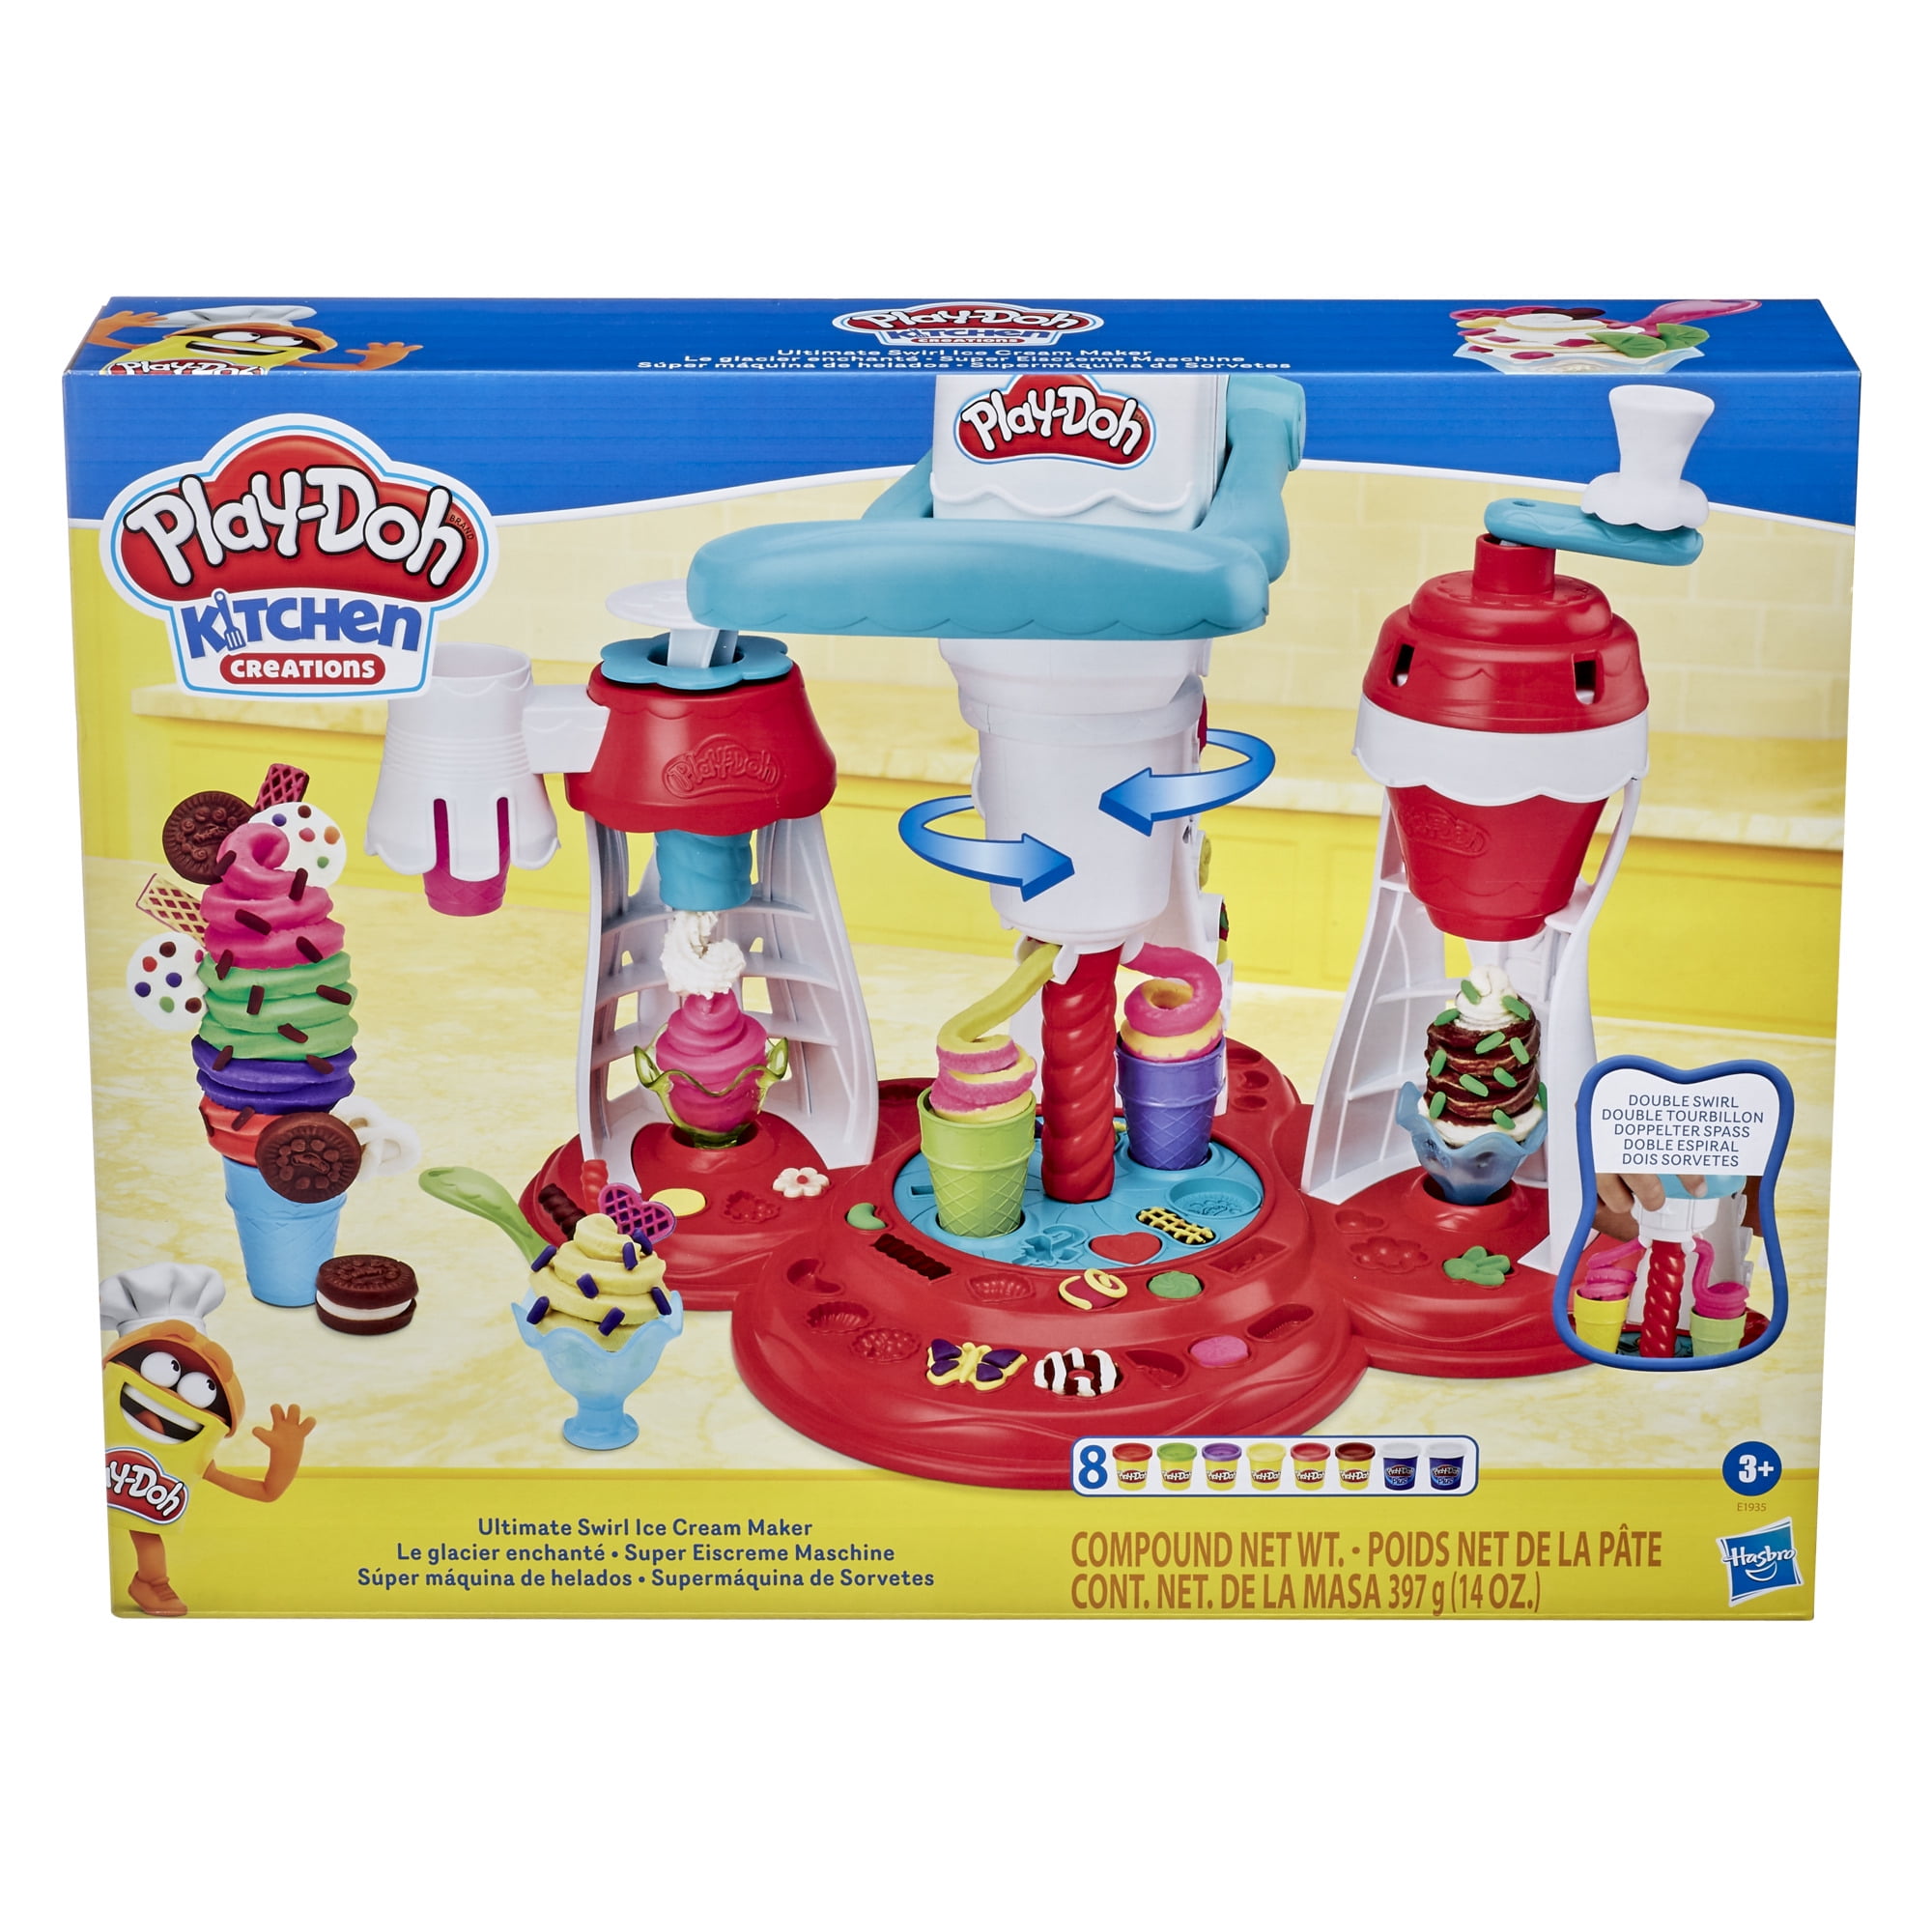 Play-Doh Kitchen Creations Ultimate Swirl Ice Cream Maker 